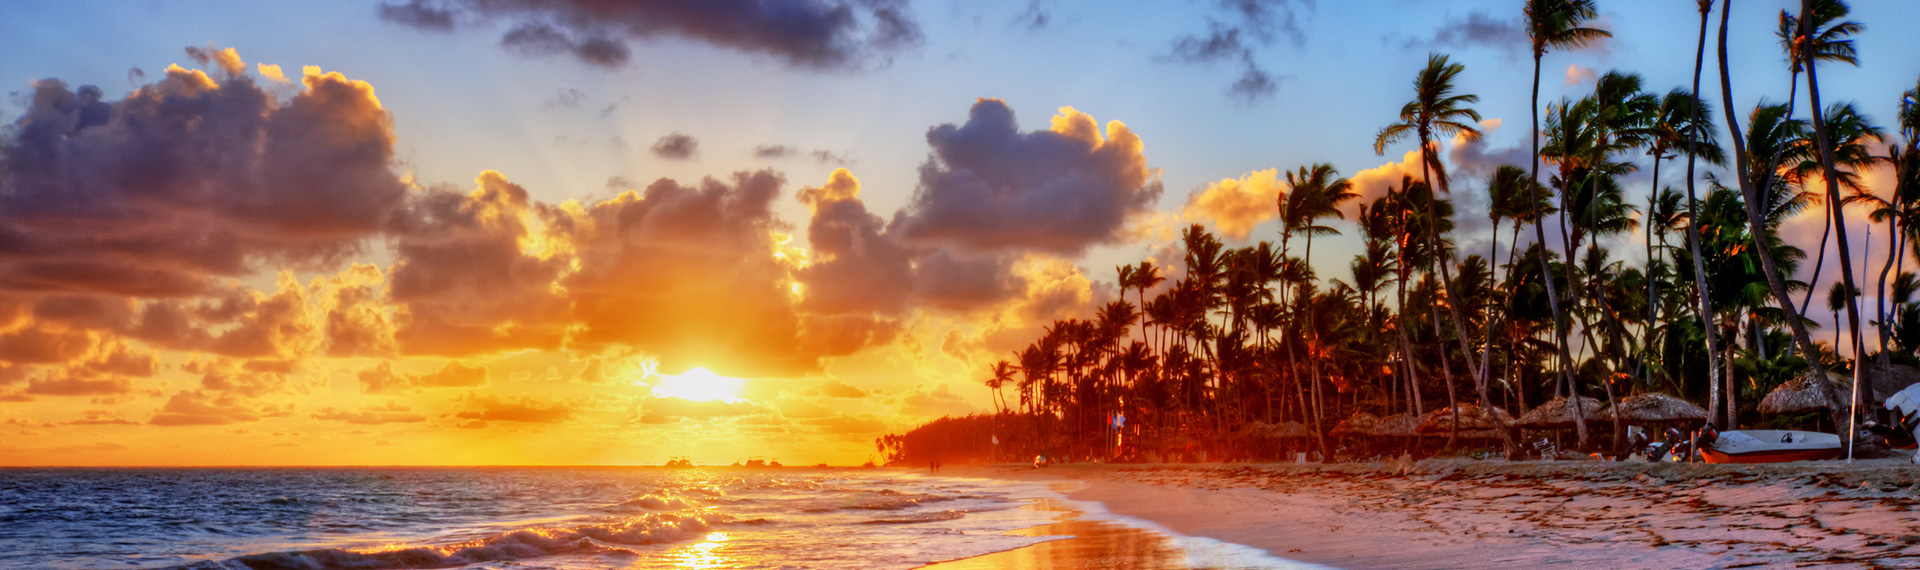 Sunset on the beach of the caribbean